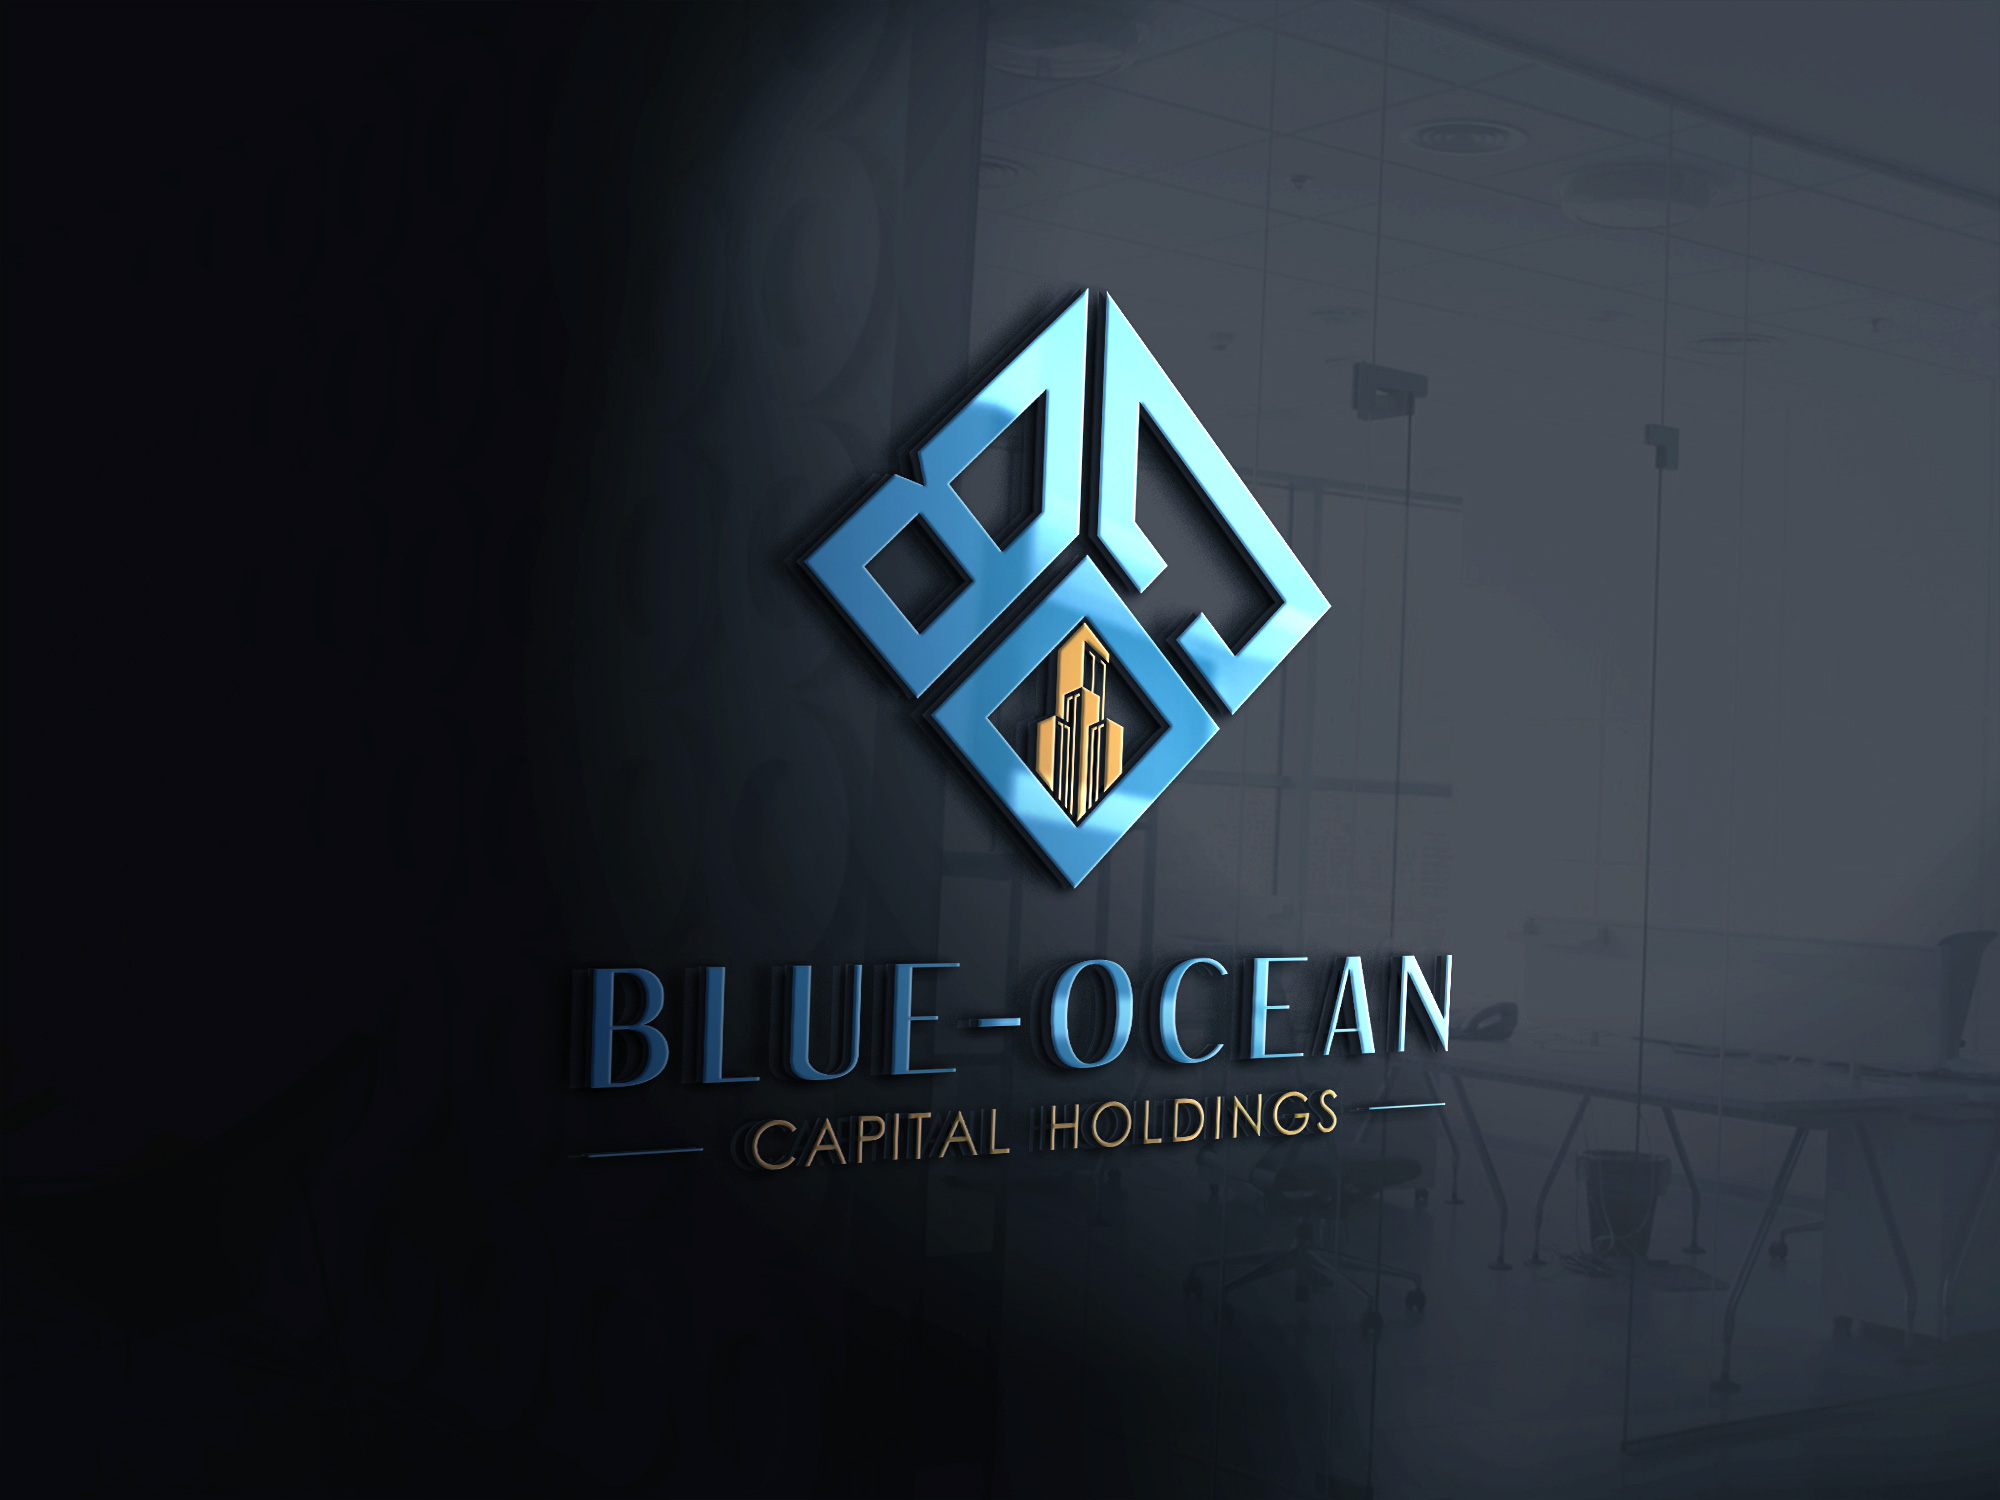 Blue-Ocean Capital Holdings